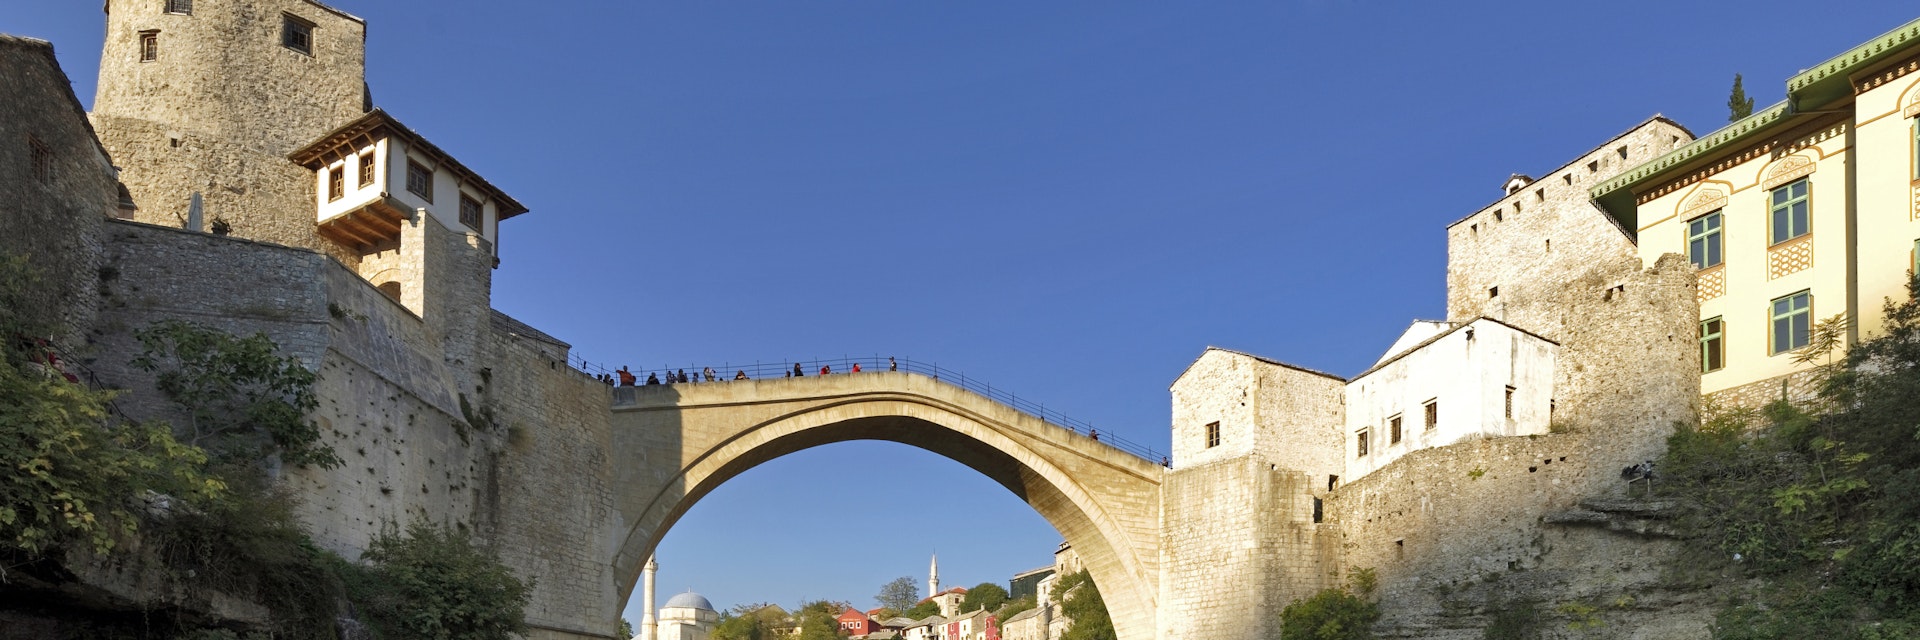 Bosnia and Herzegovina, Mostar, Old Bridge